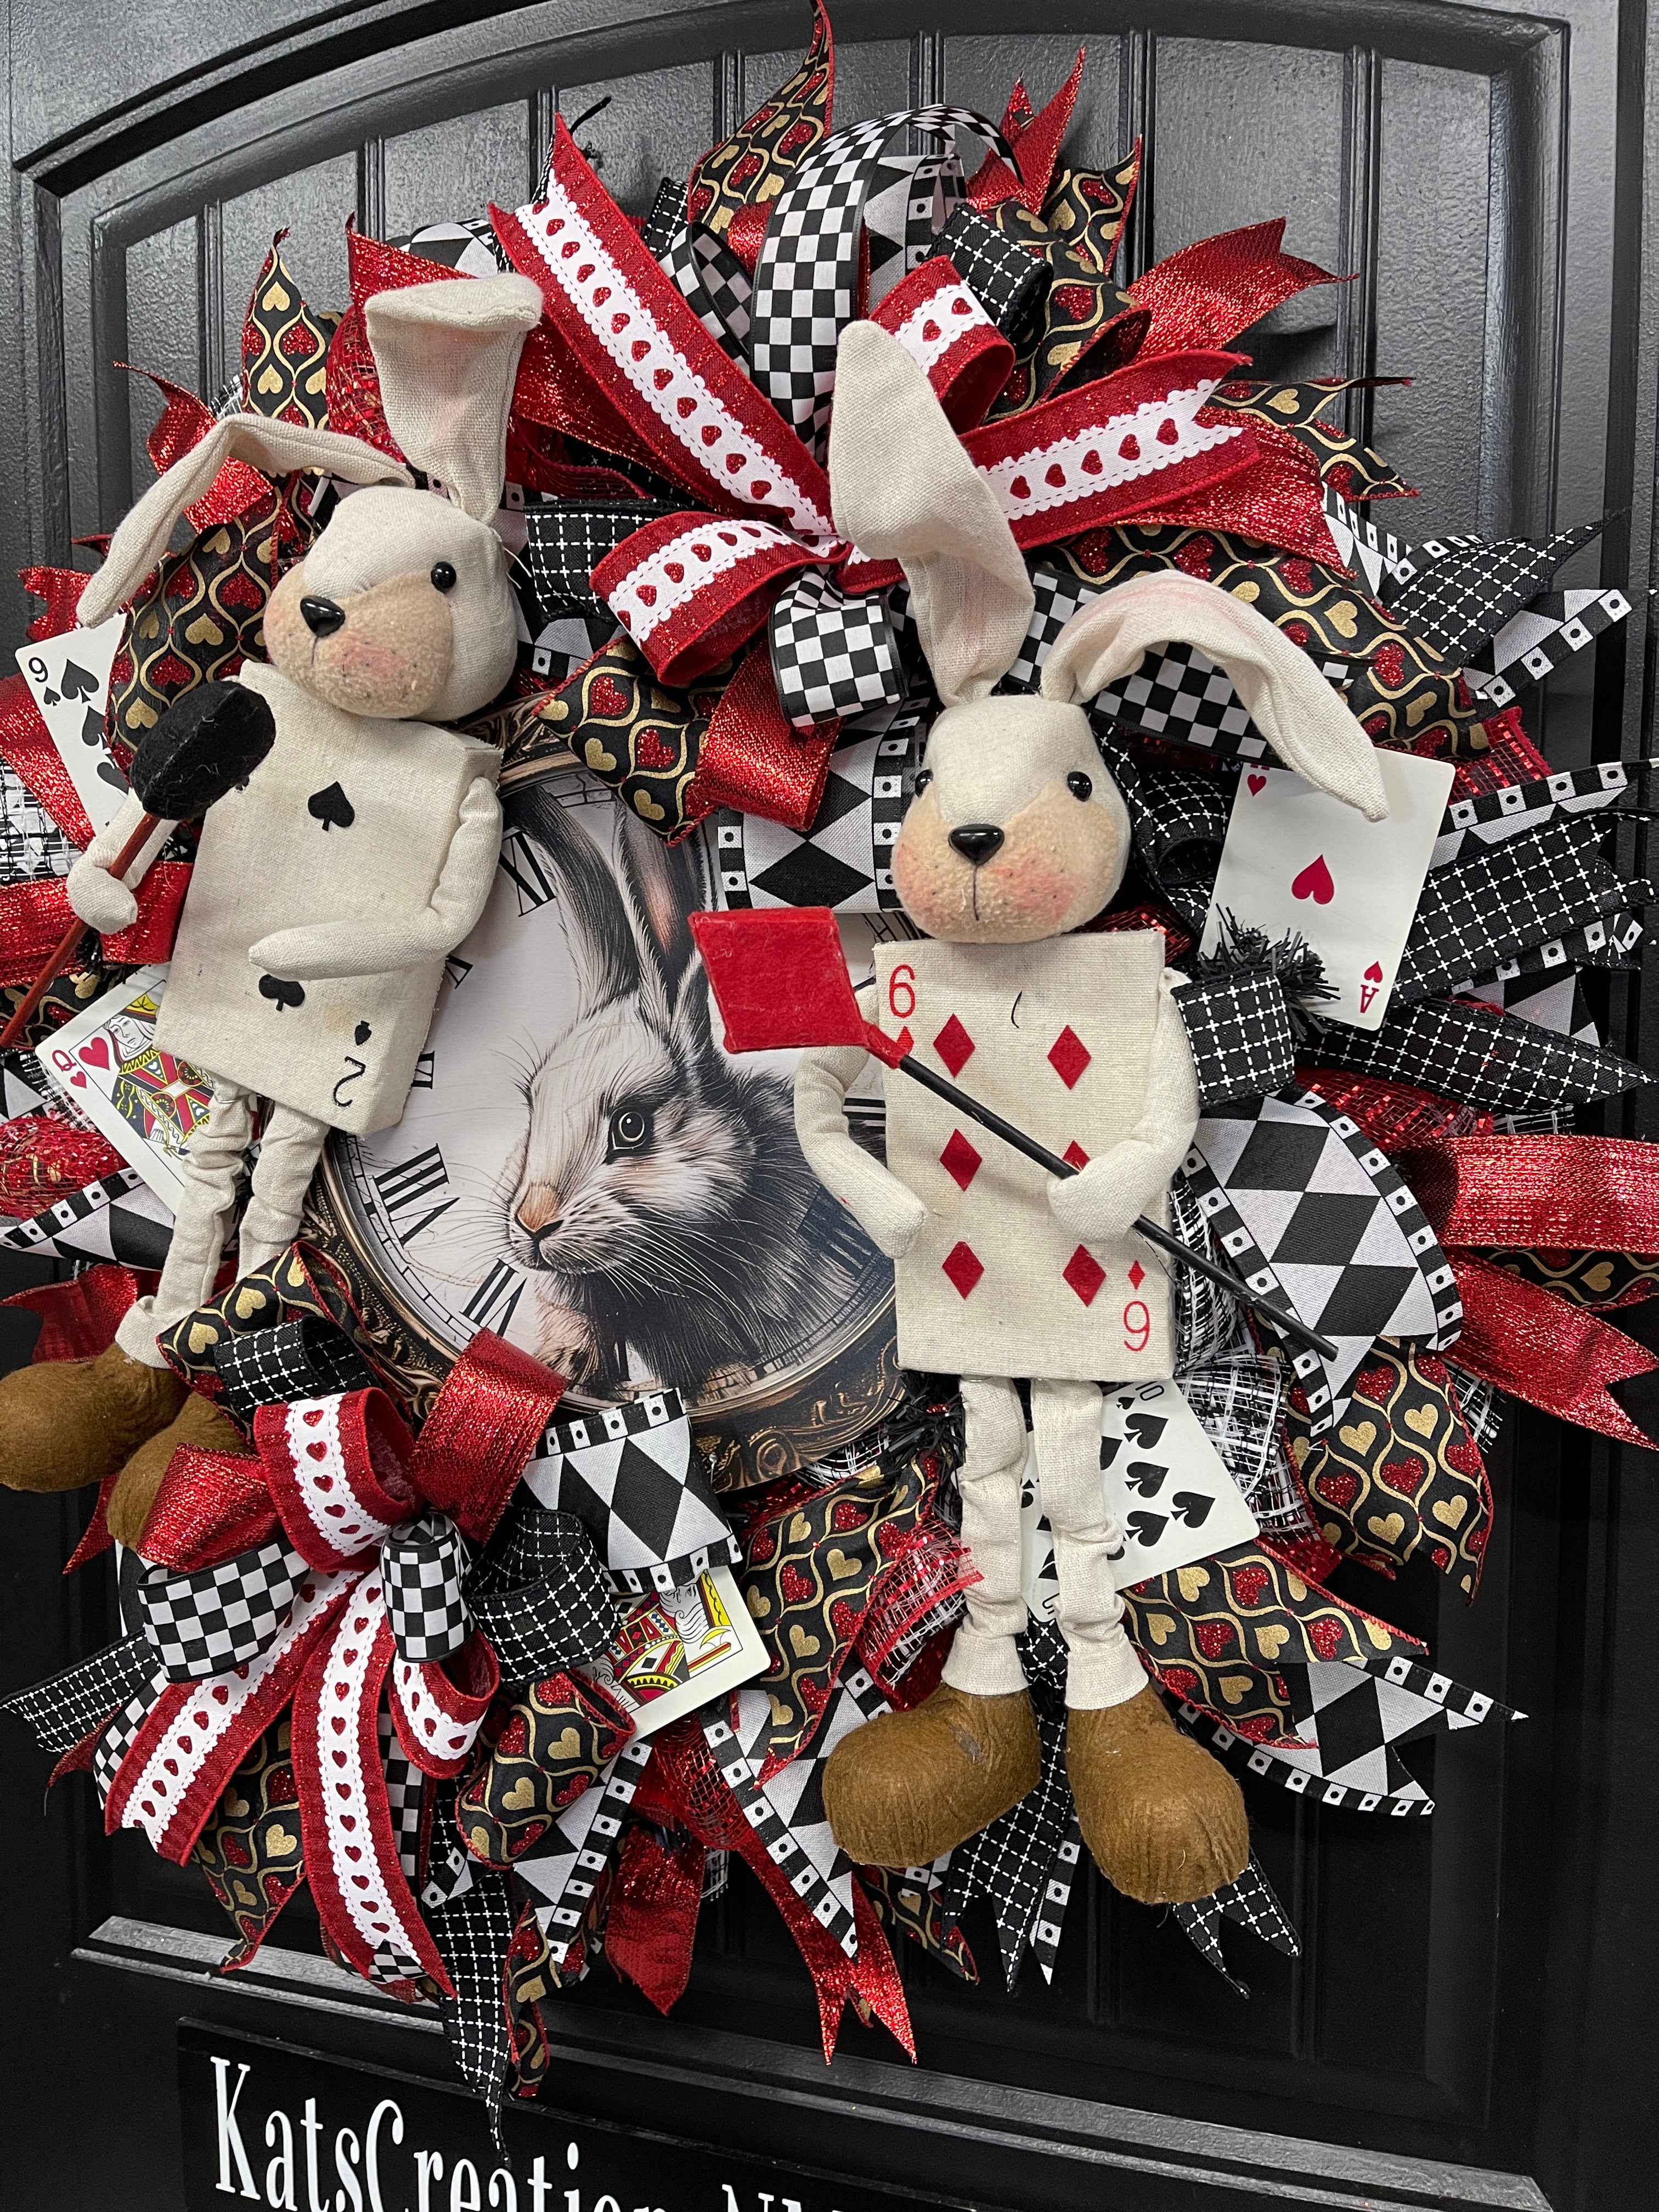 White Rabbits House of Cards Wreath, KatsCreationsNMore